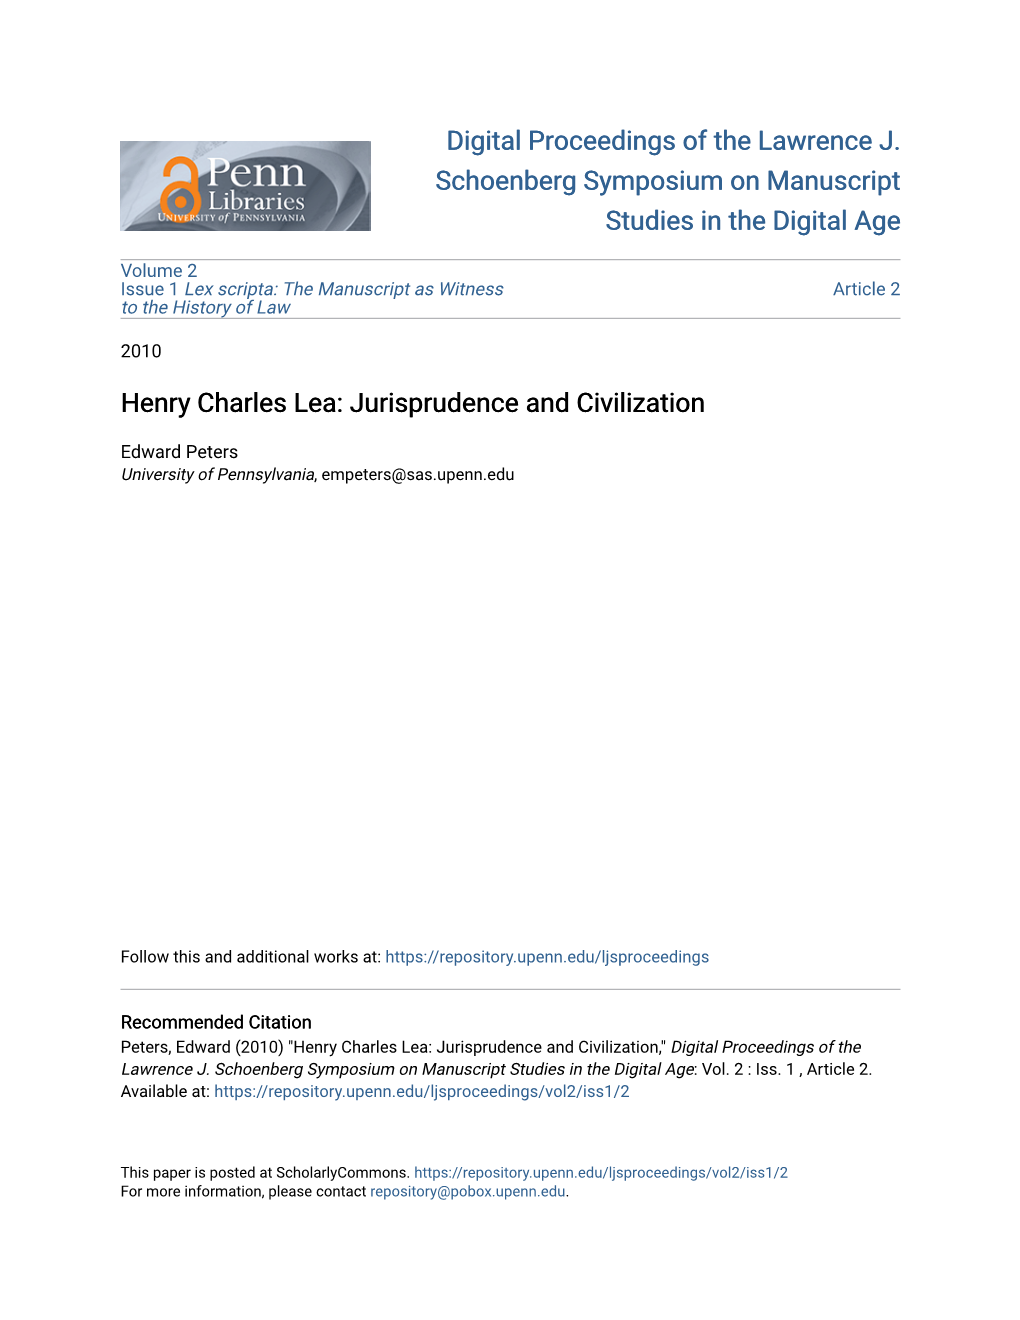 Henry Charles Lea: Jurisprudence and Civilization